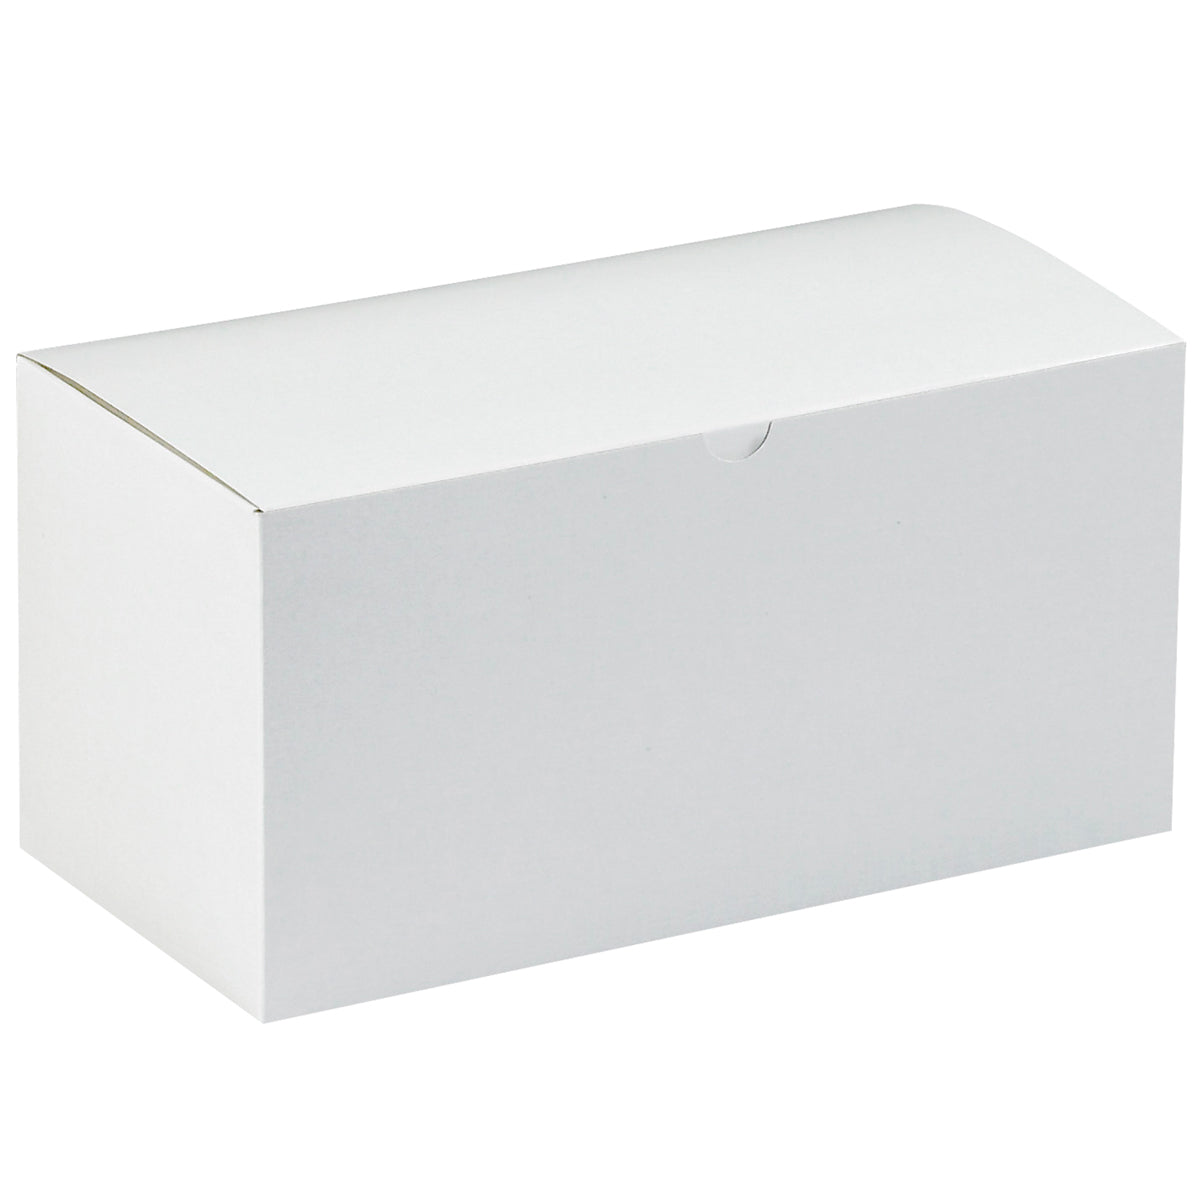 12 x 6 x 6 White (Flat Finish) Gift Box - PackagingSupplies.com